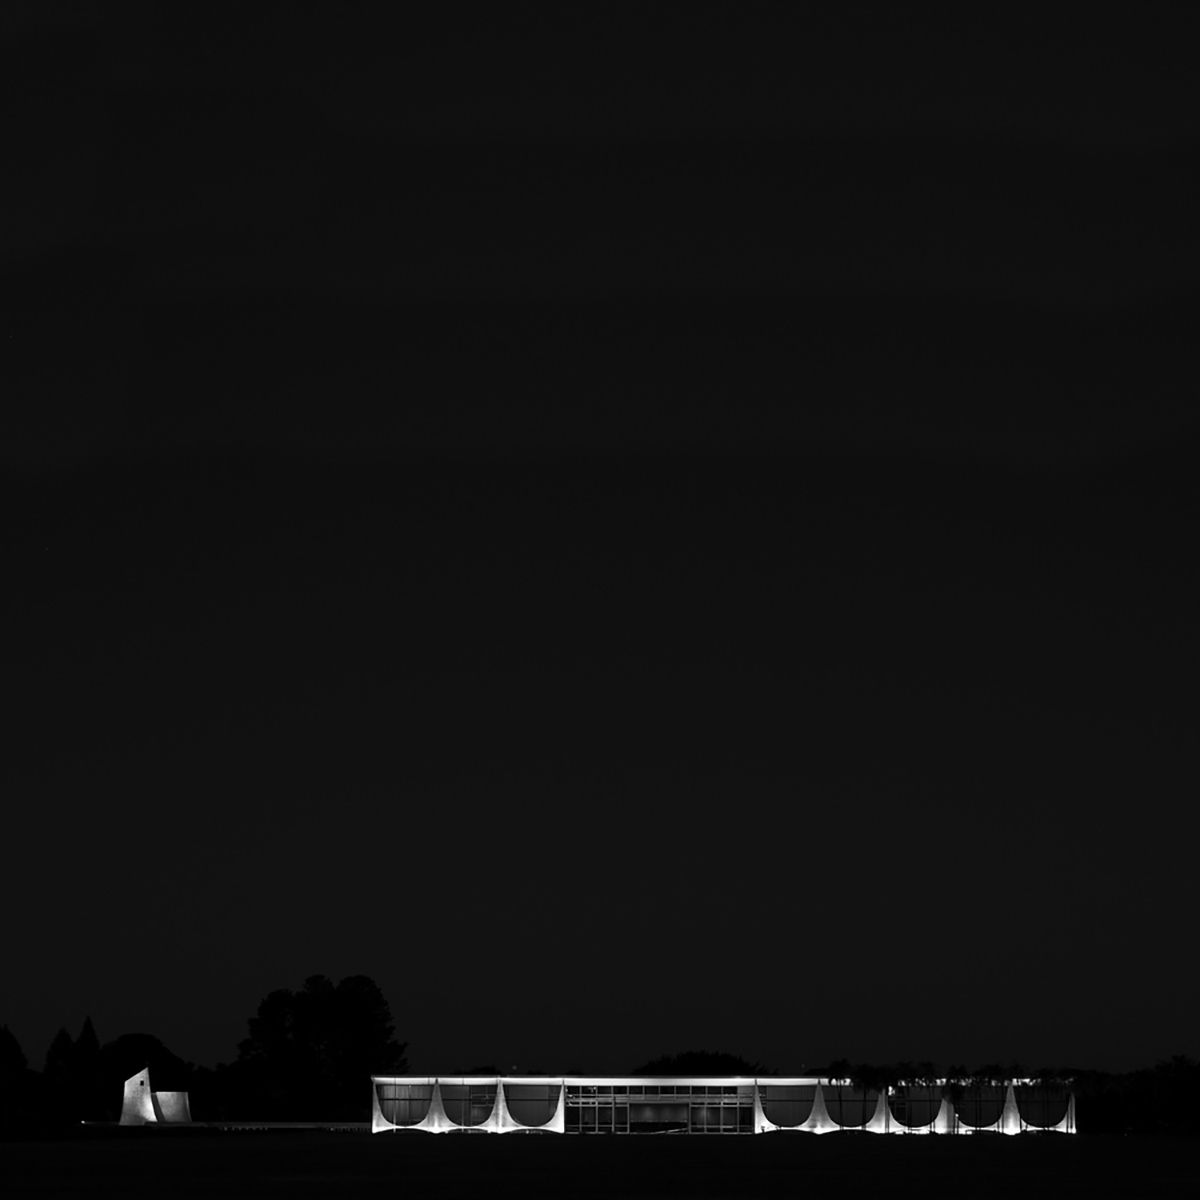 Oscar Niemeyer qua lăng kính của Haruo Mikami 24 1